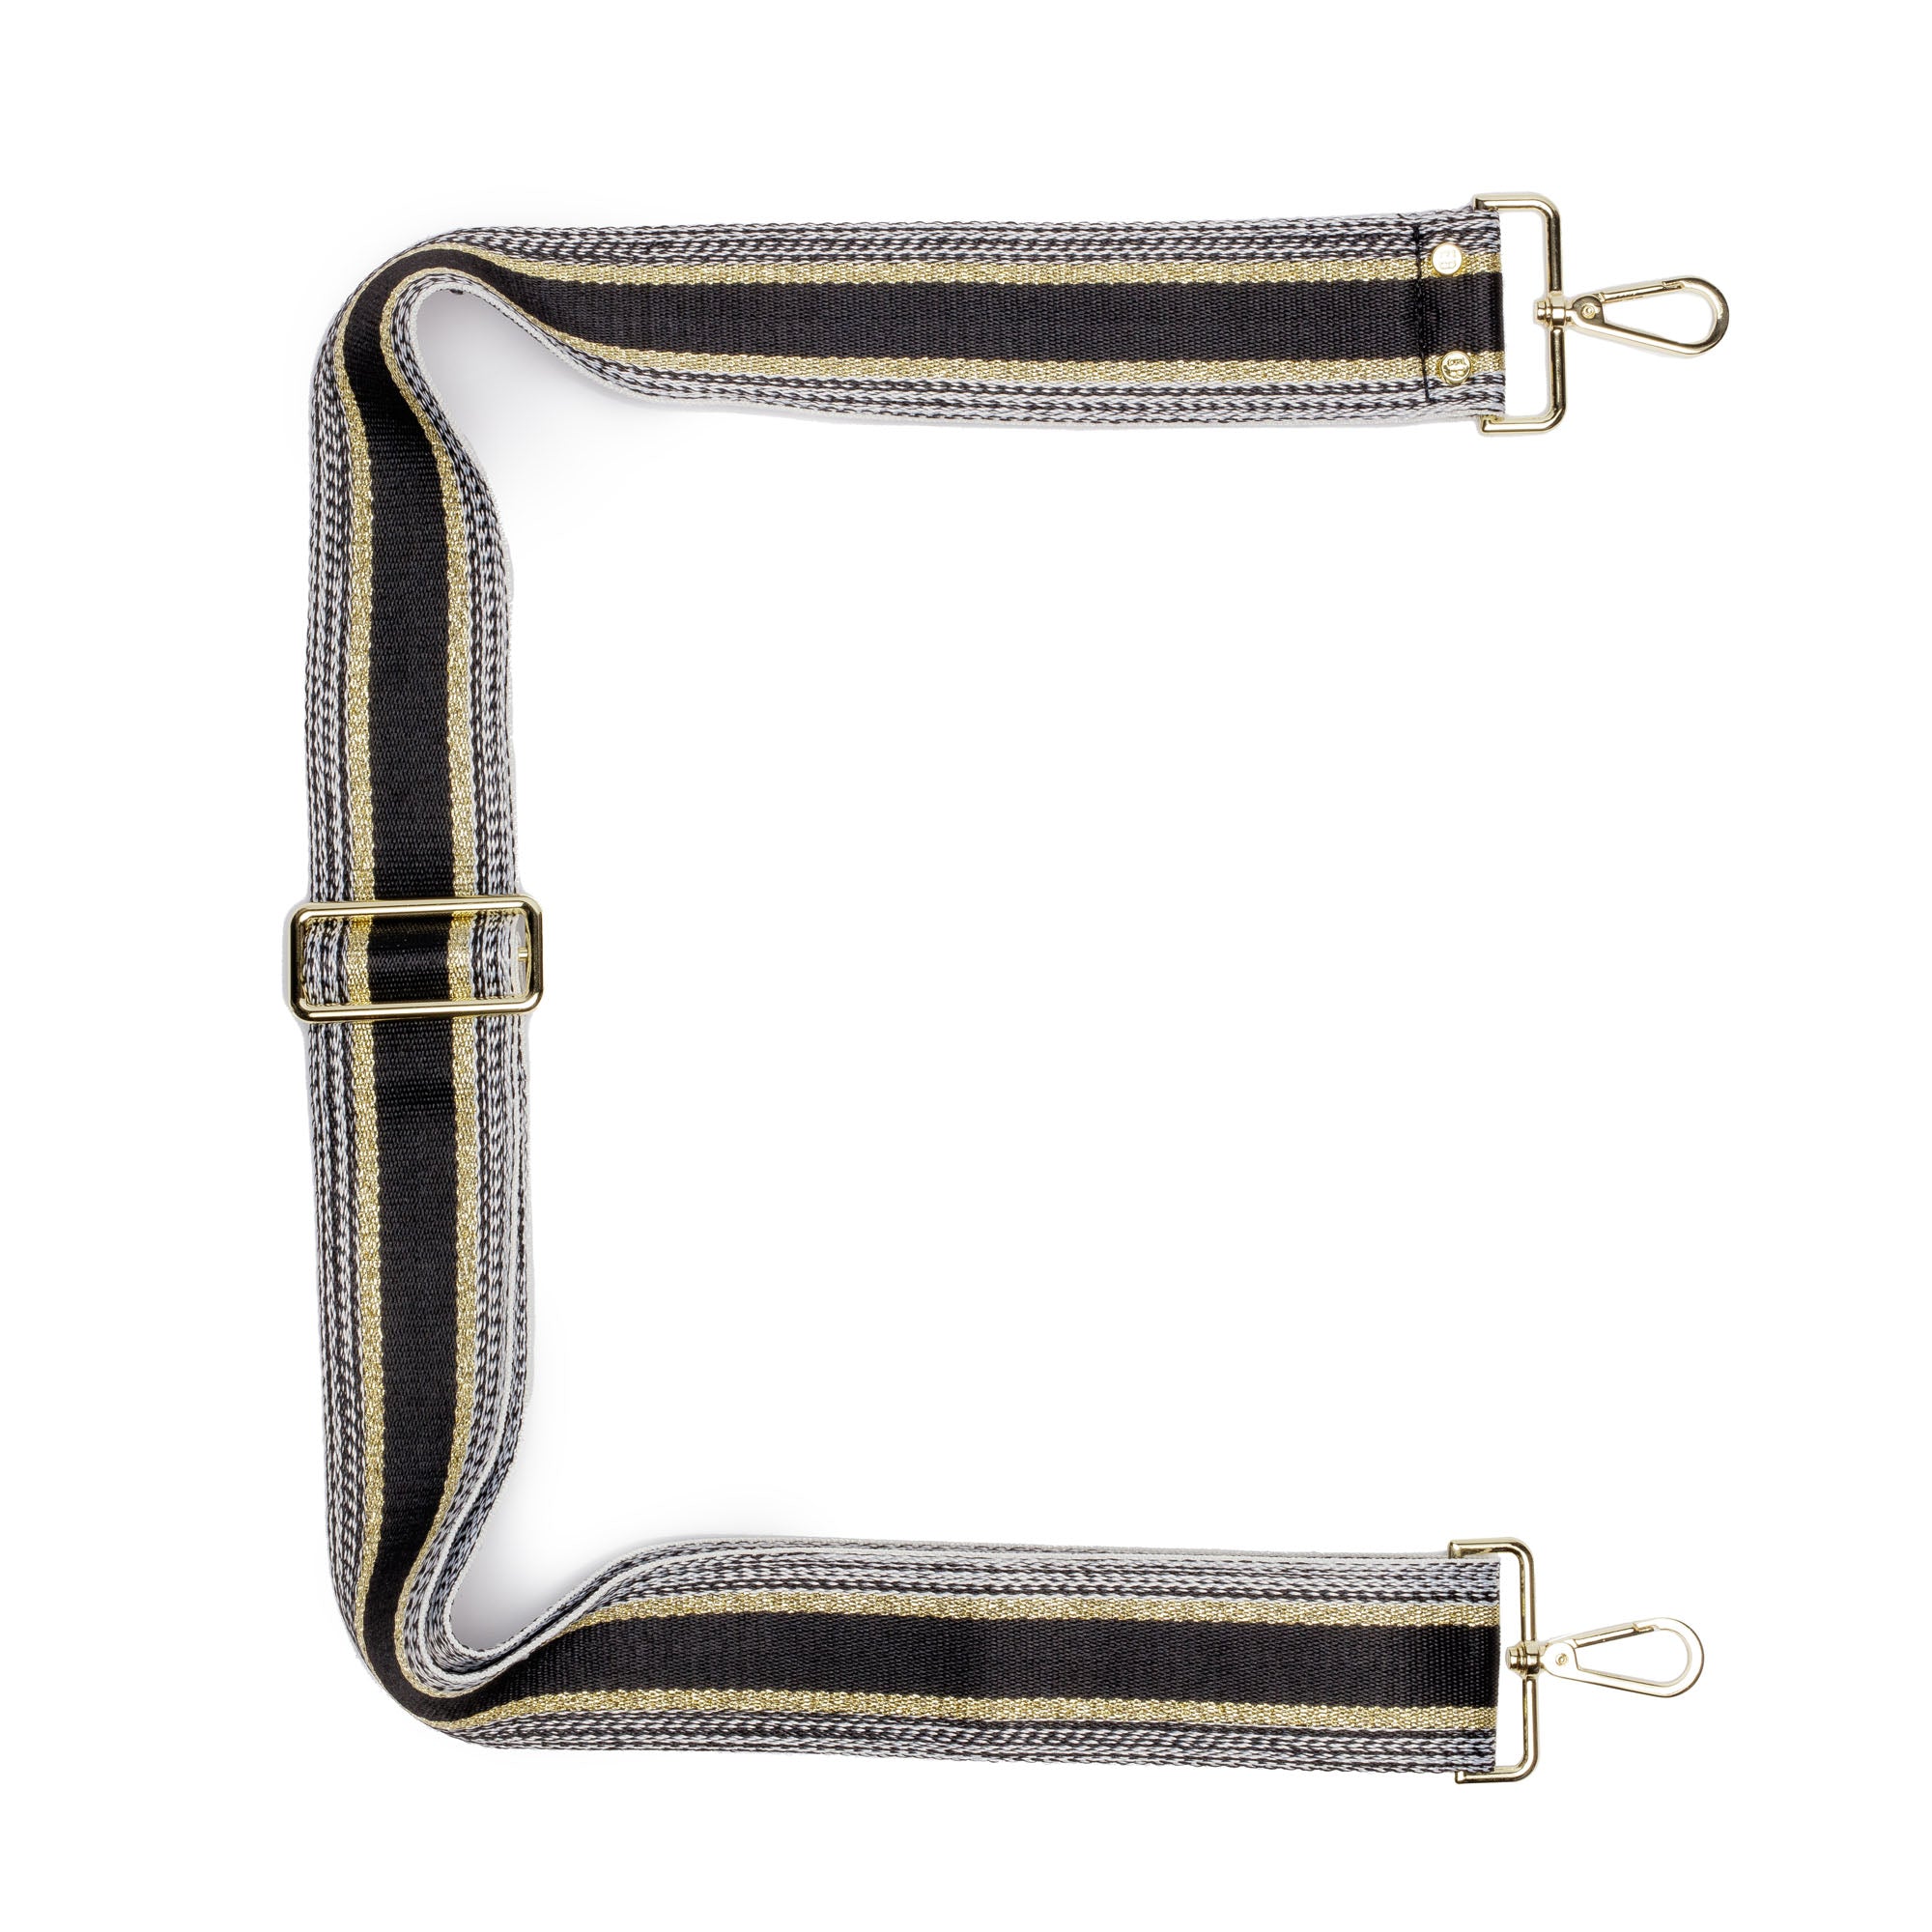 Crossbody strap - Metallic Black/Gold